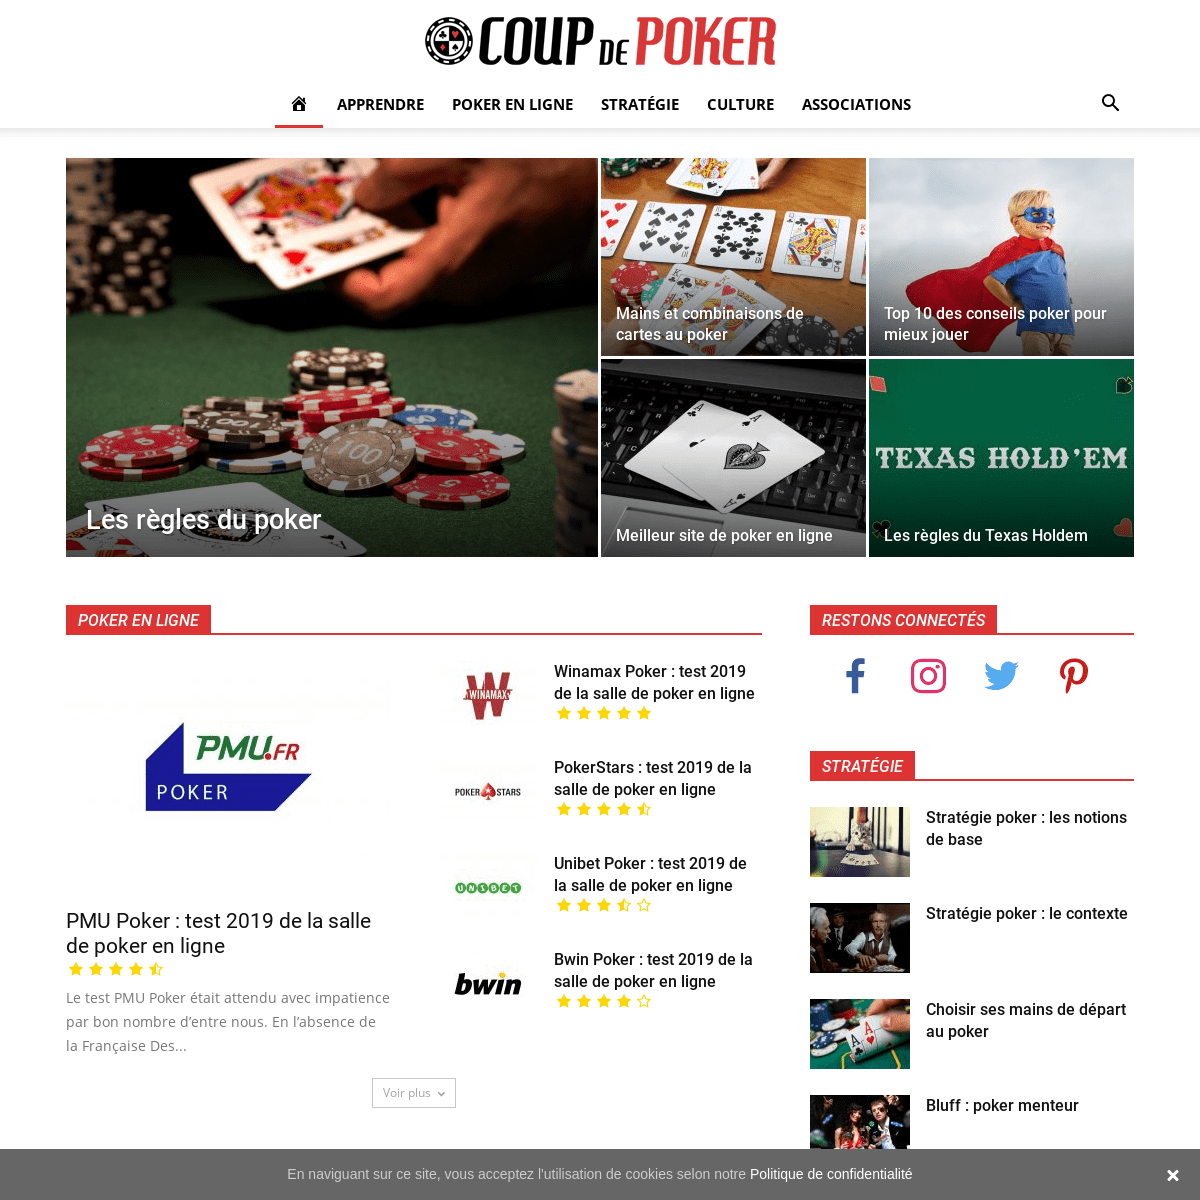 Coup de Poker : guide en ligne gratuit du poker en France